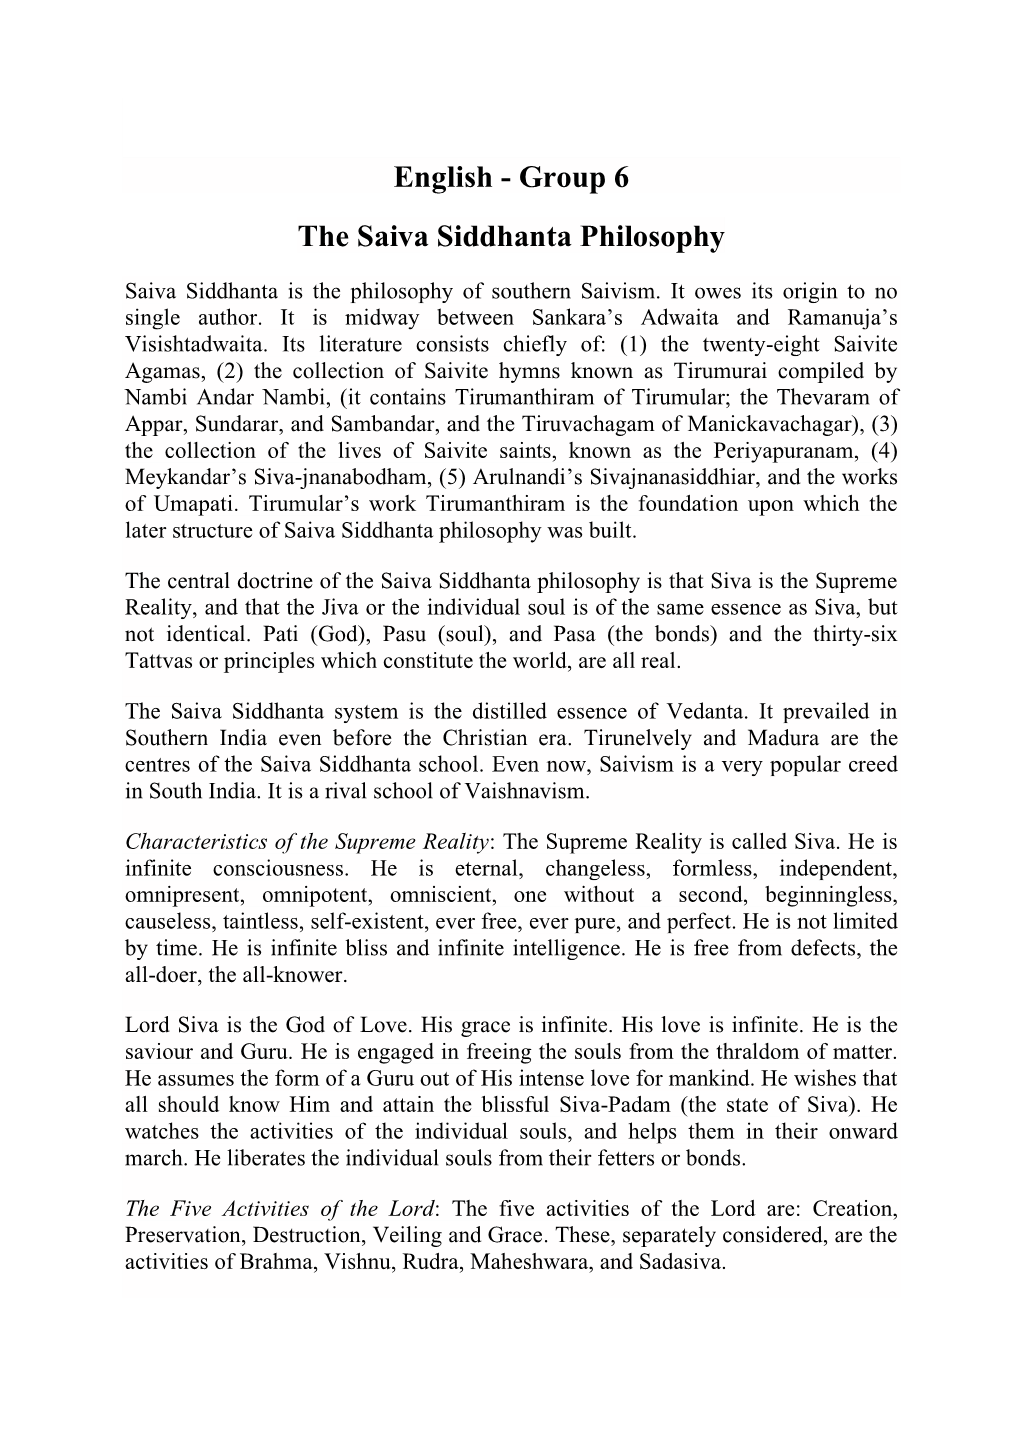 English - Group 6 the Saiva Siddhanta Philosophy